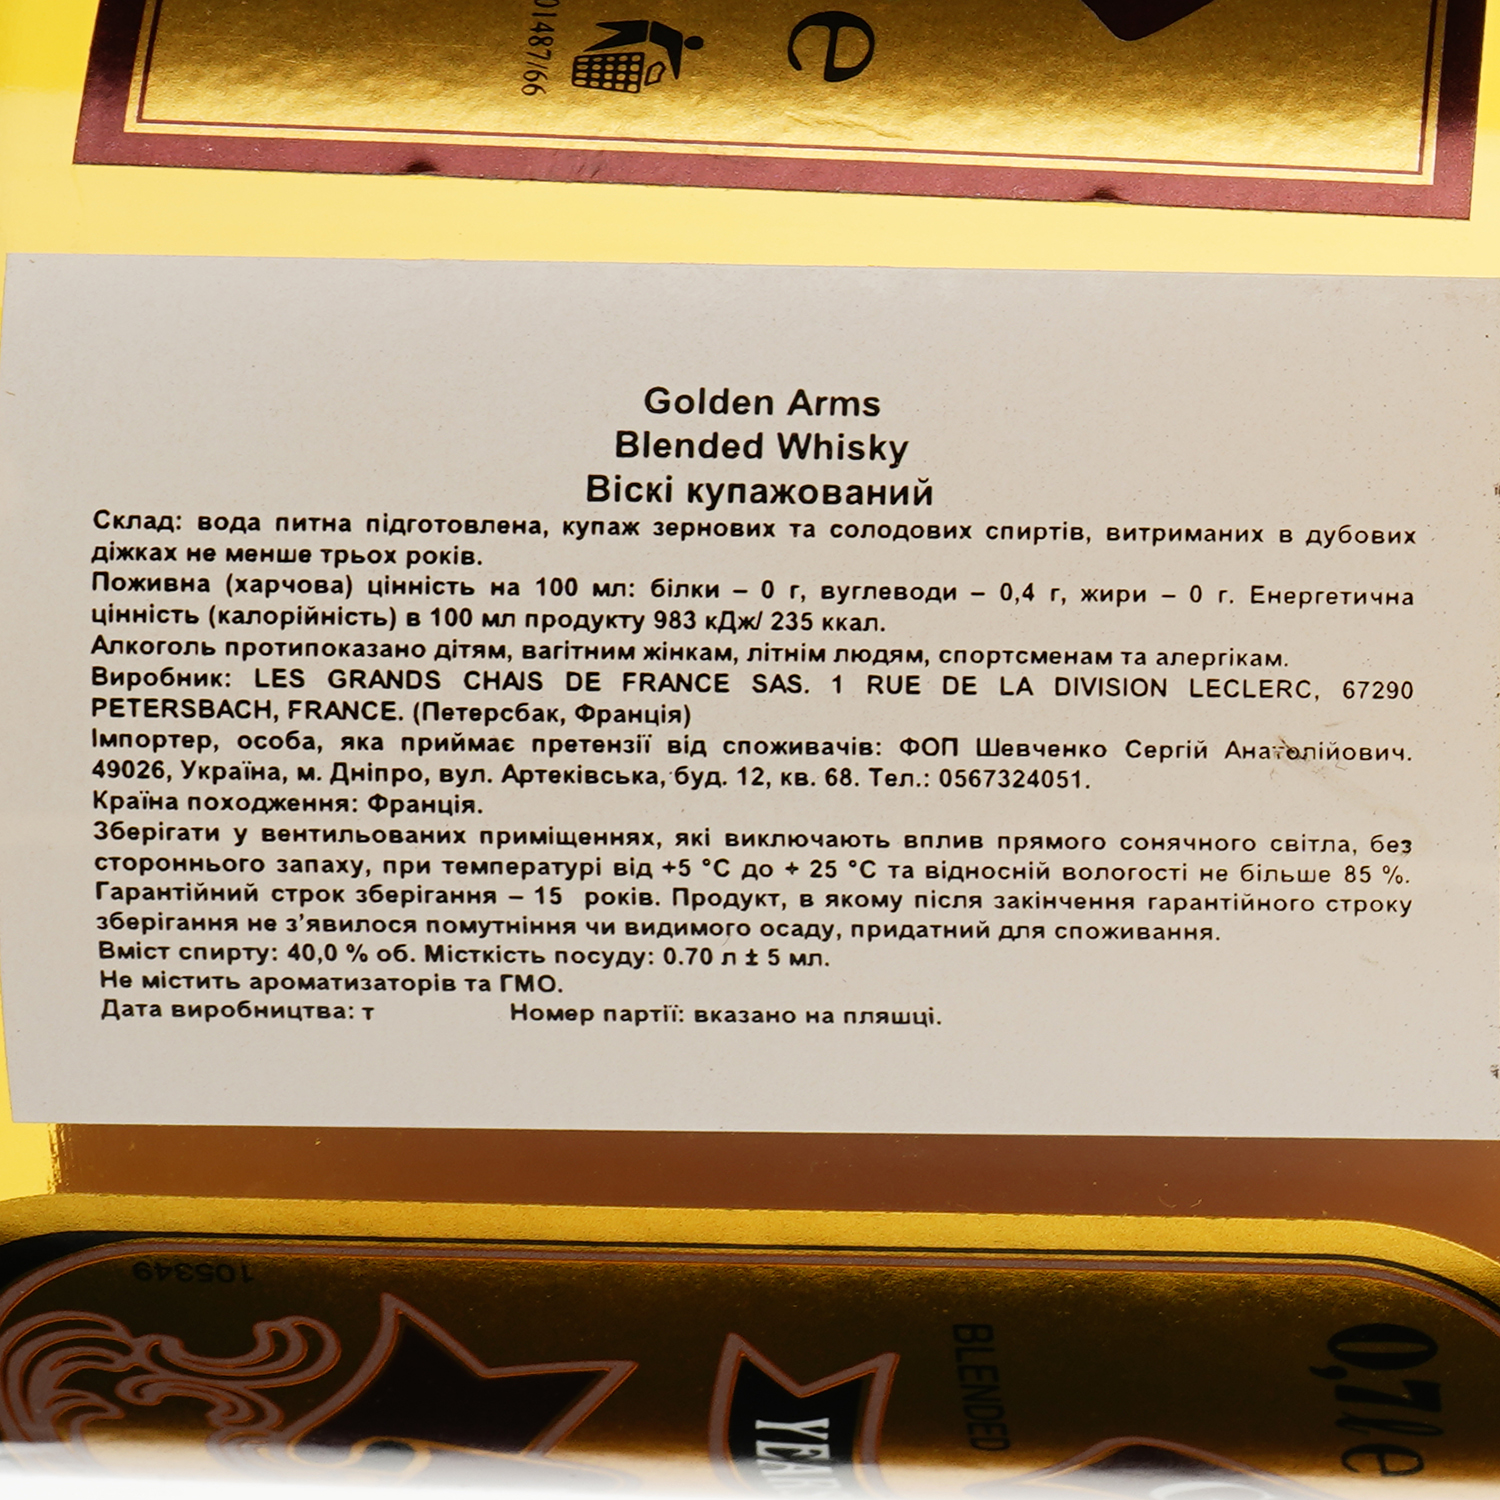 Виски Golden Arms 3 YO Blended Scotch Whisky, 40%, 0.7 л - фото 3